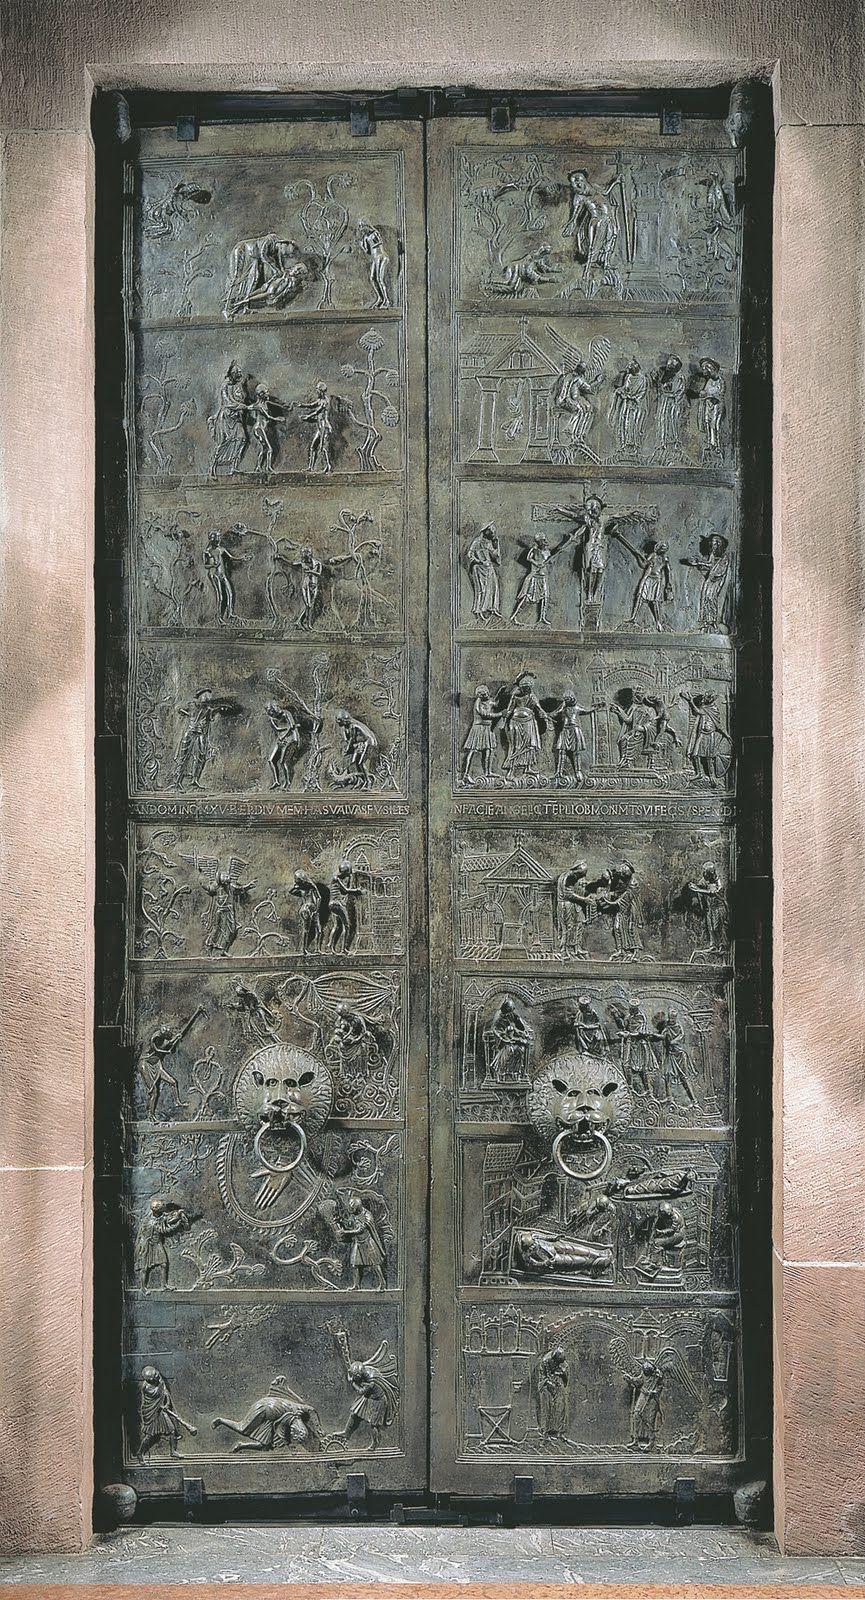 Ottonian Empire Doors with relief panels, showing bible scenes from Genesis, to Jesus.